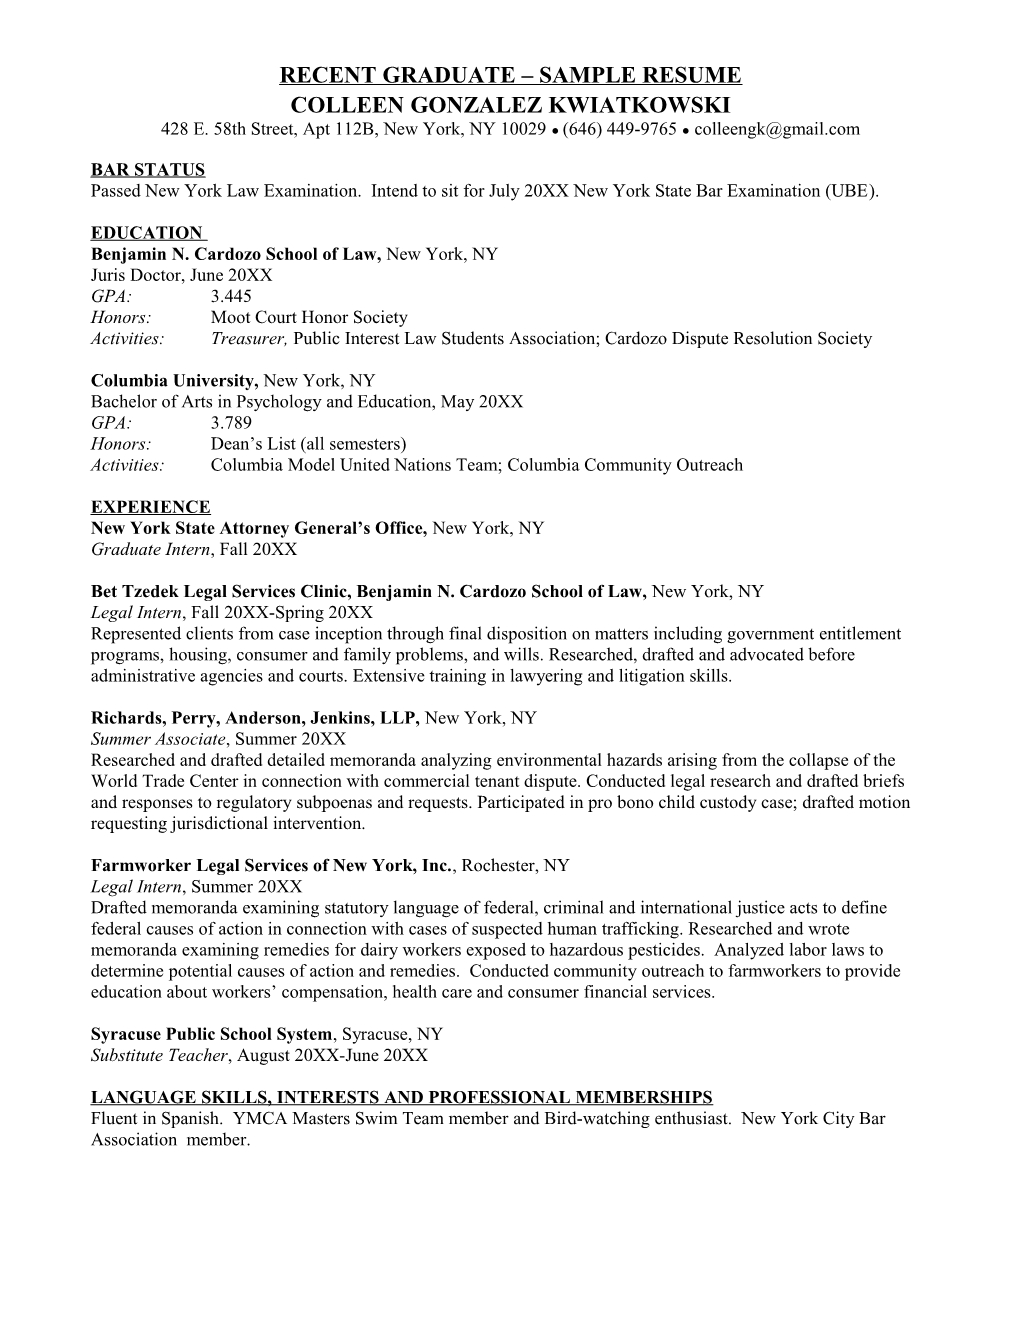 Recent Graduate Sample Resume